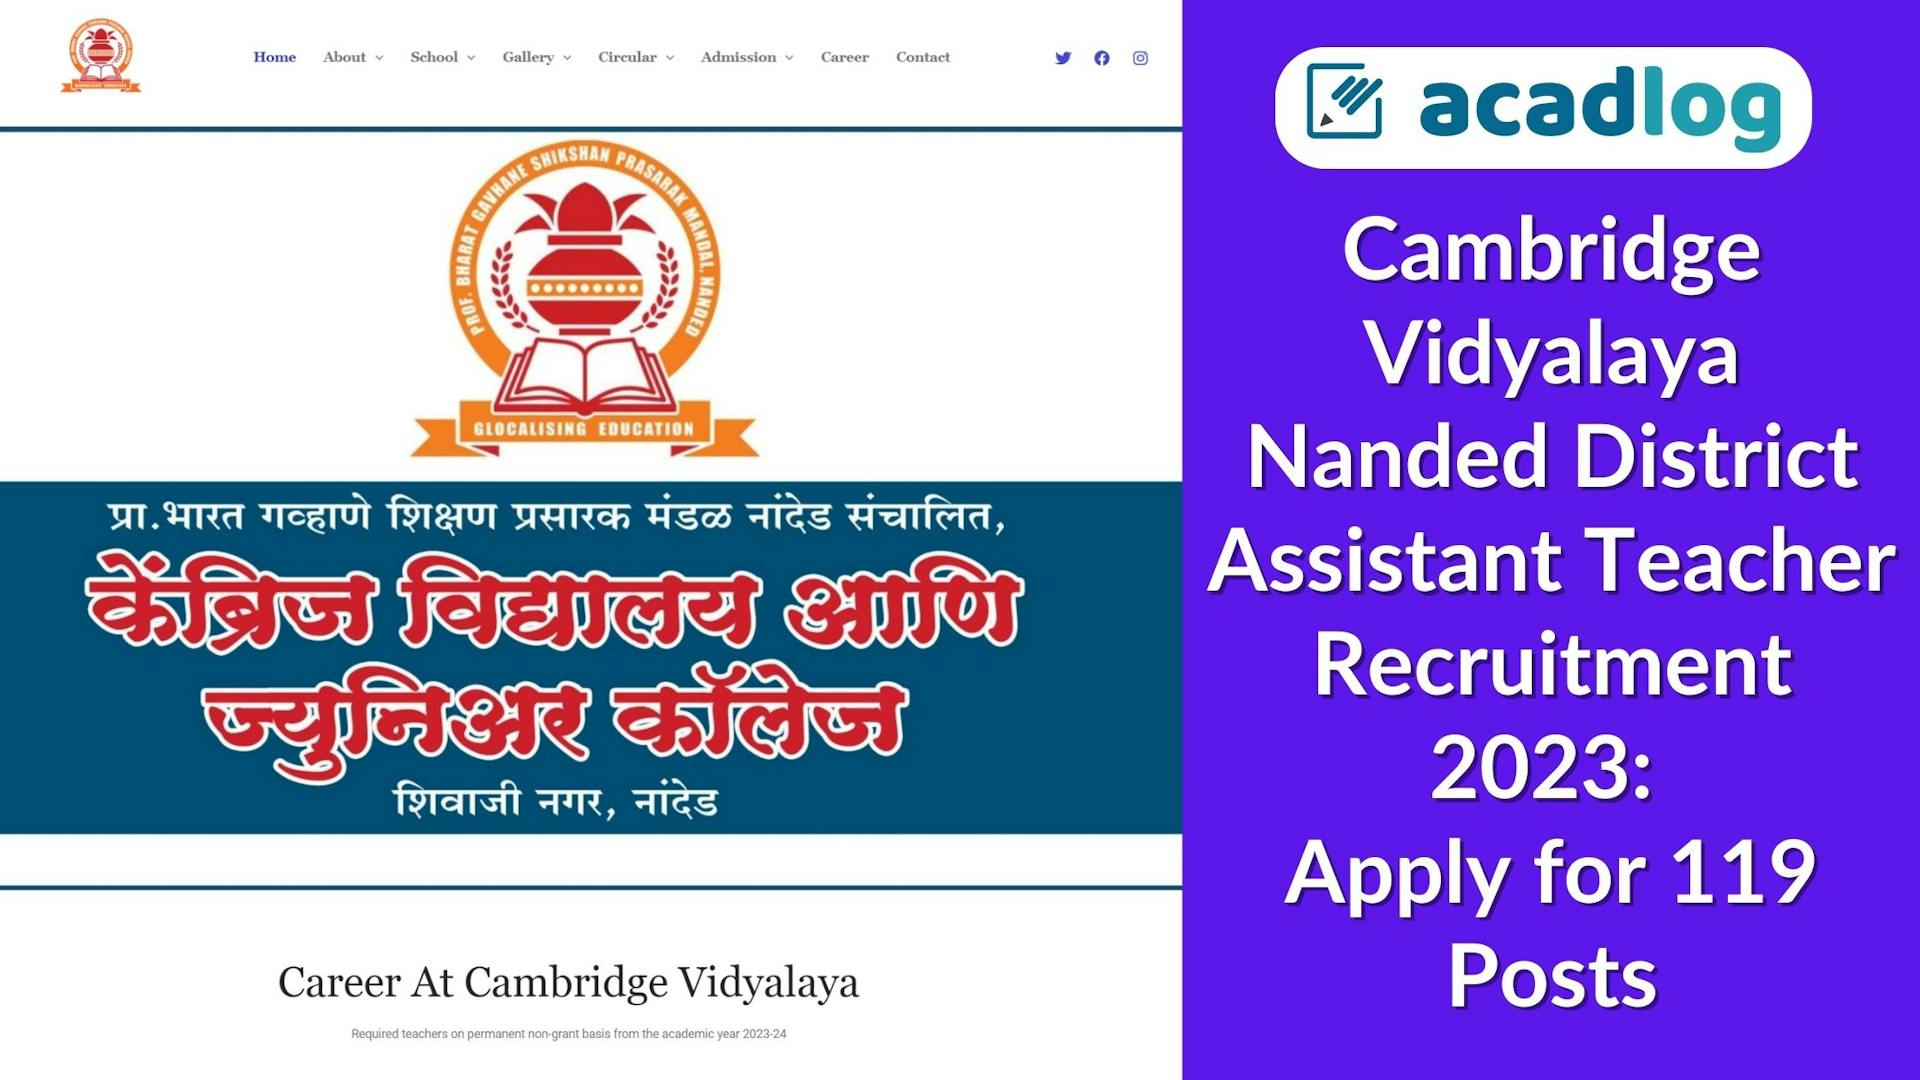 Cambridge Vidyalaya Nanded Assistant Teacher Recruitment 2023: Apply for 119 Posts